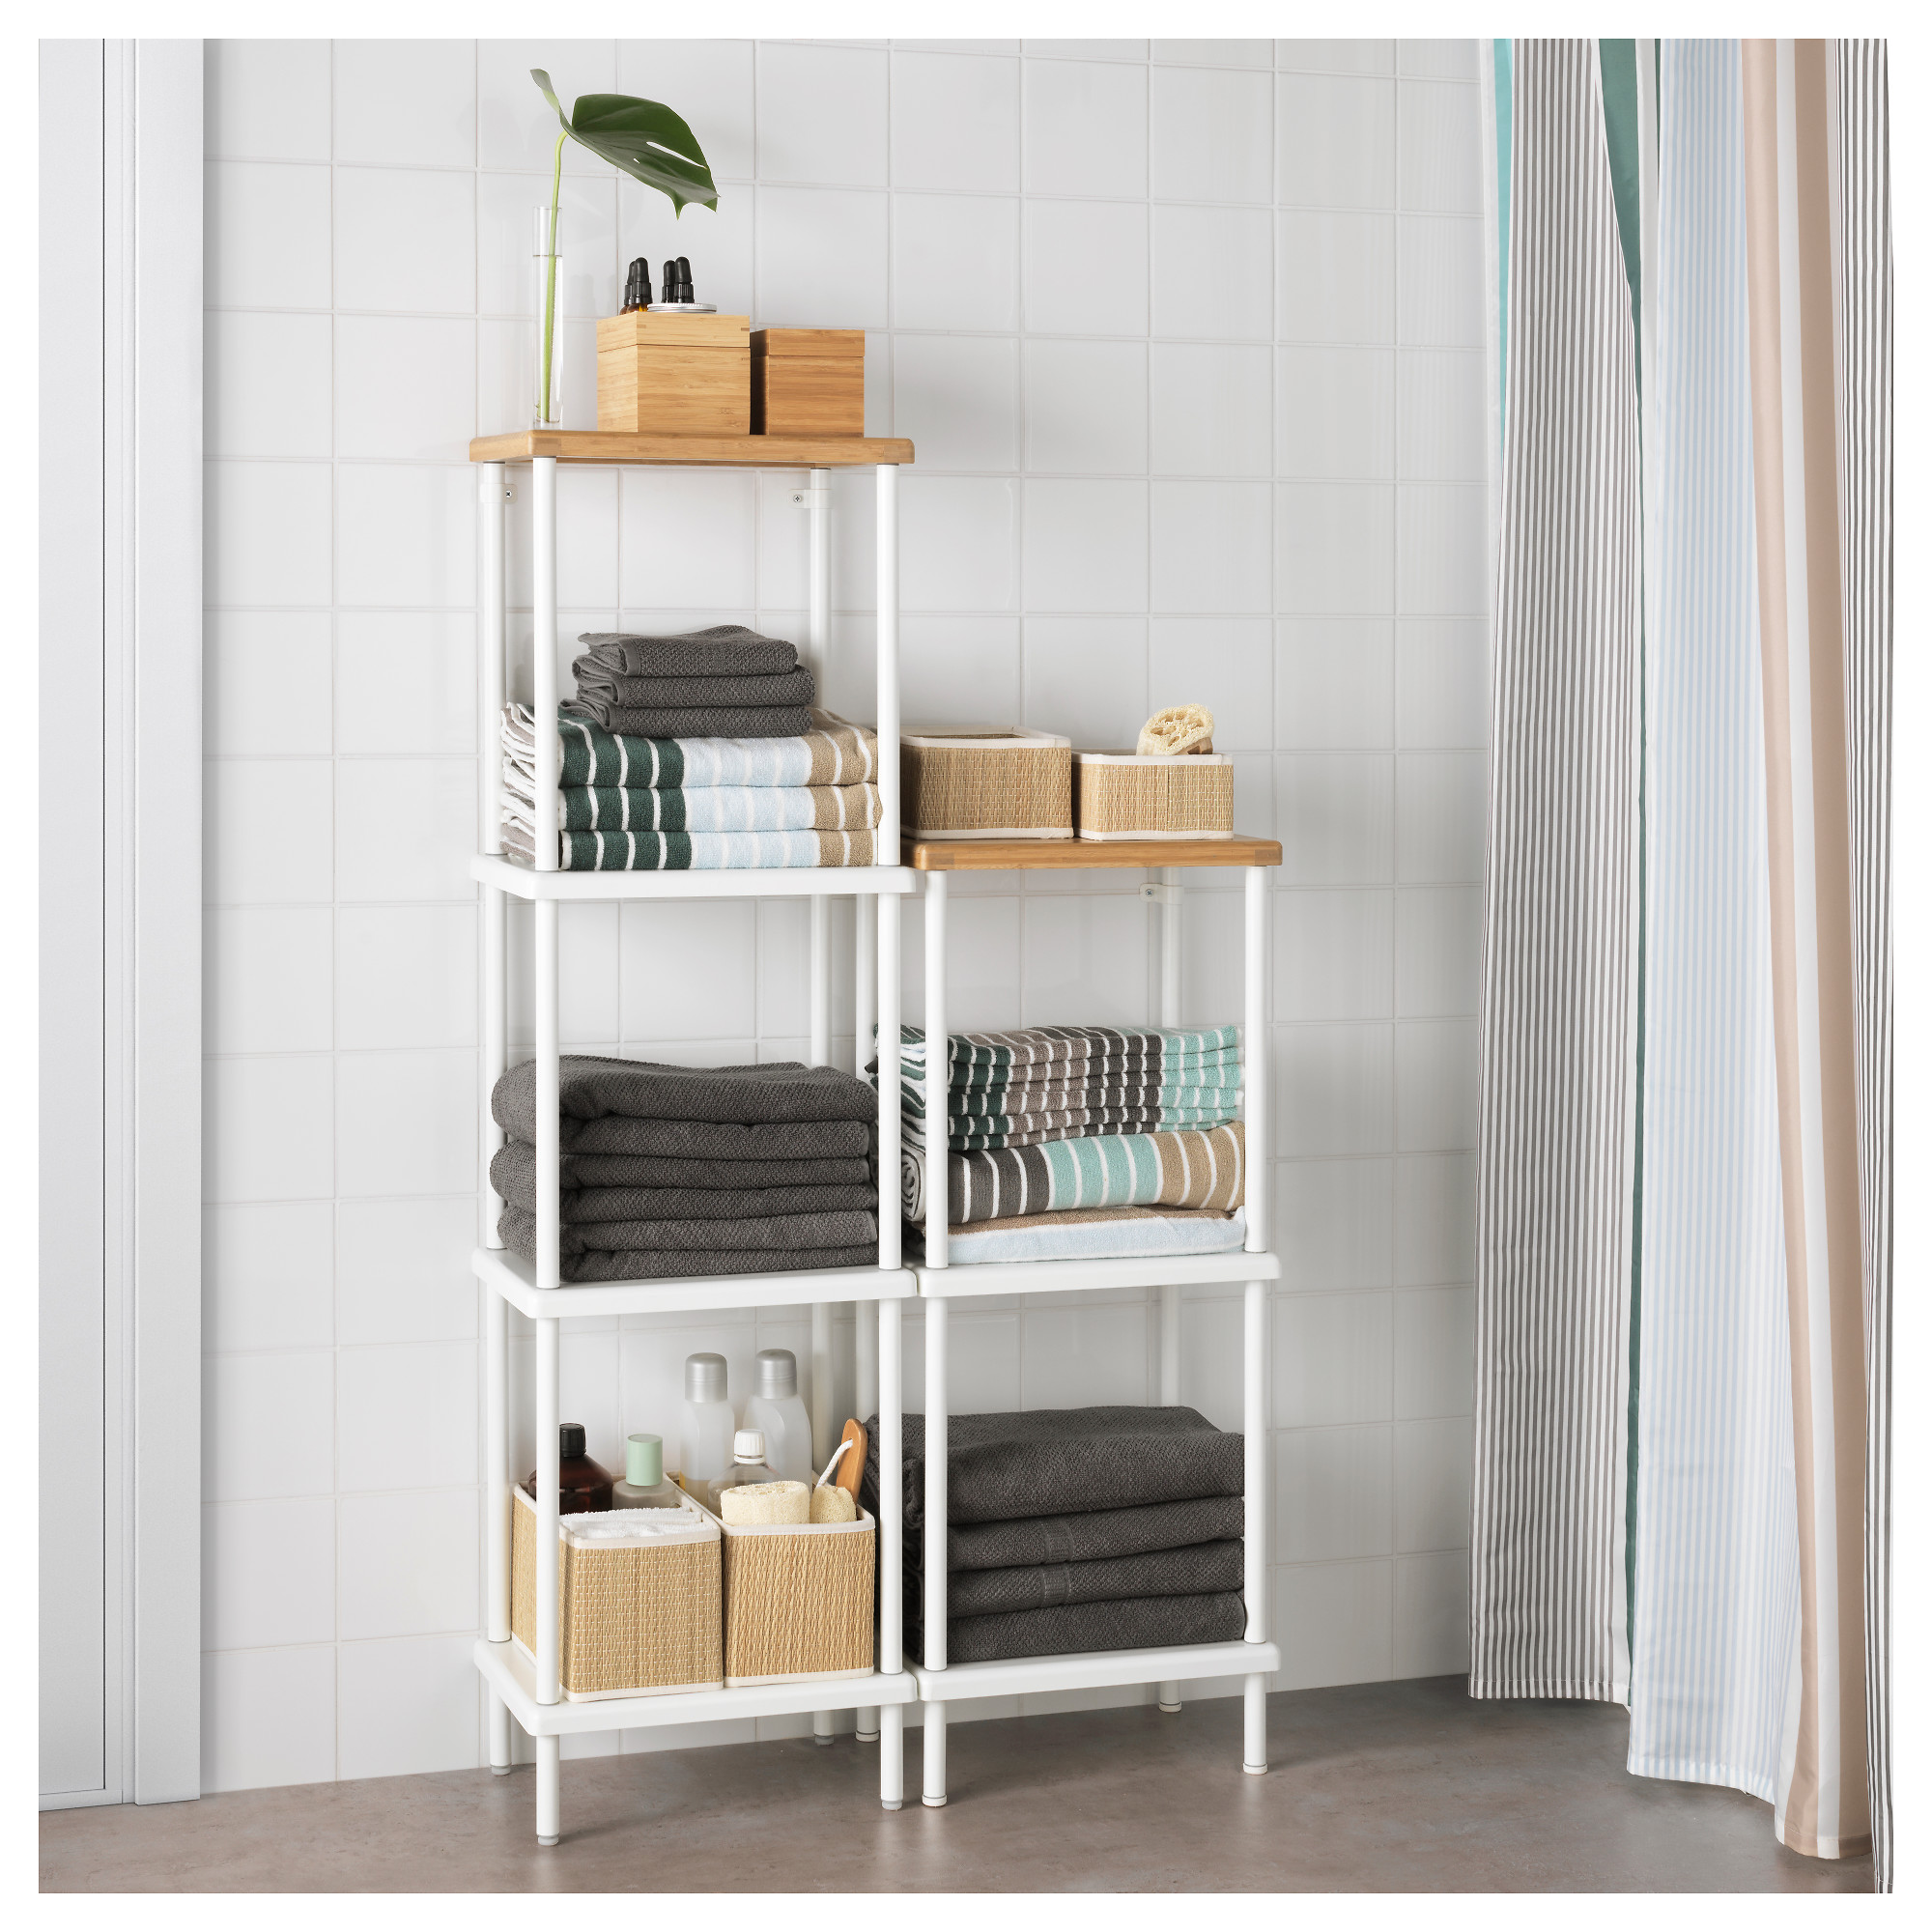  DYNAN  shelf unit white bamboo pattern IKEA  Hong Kong 